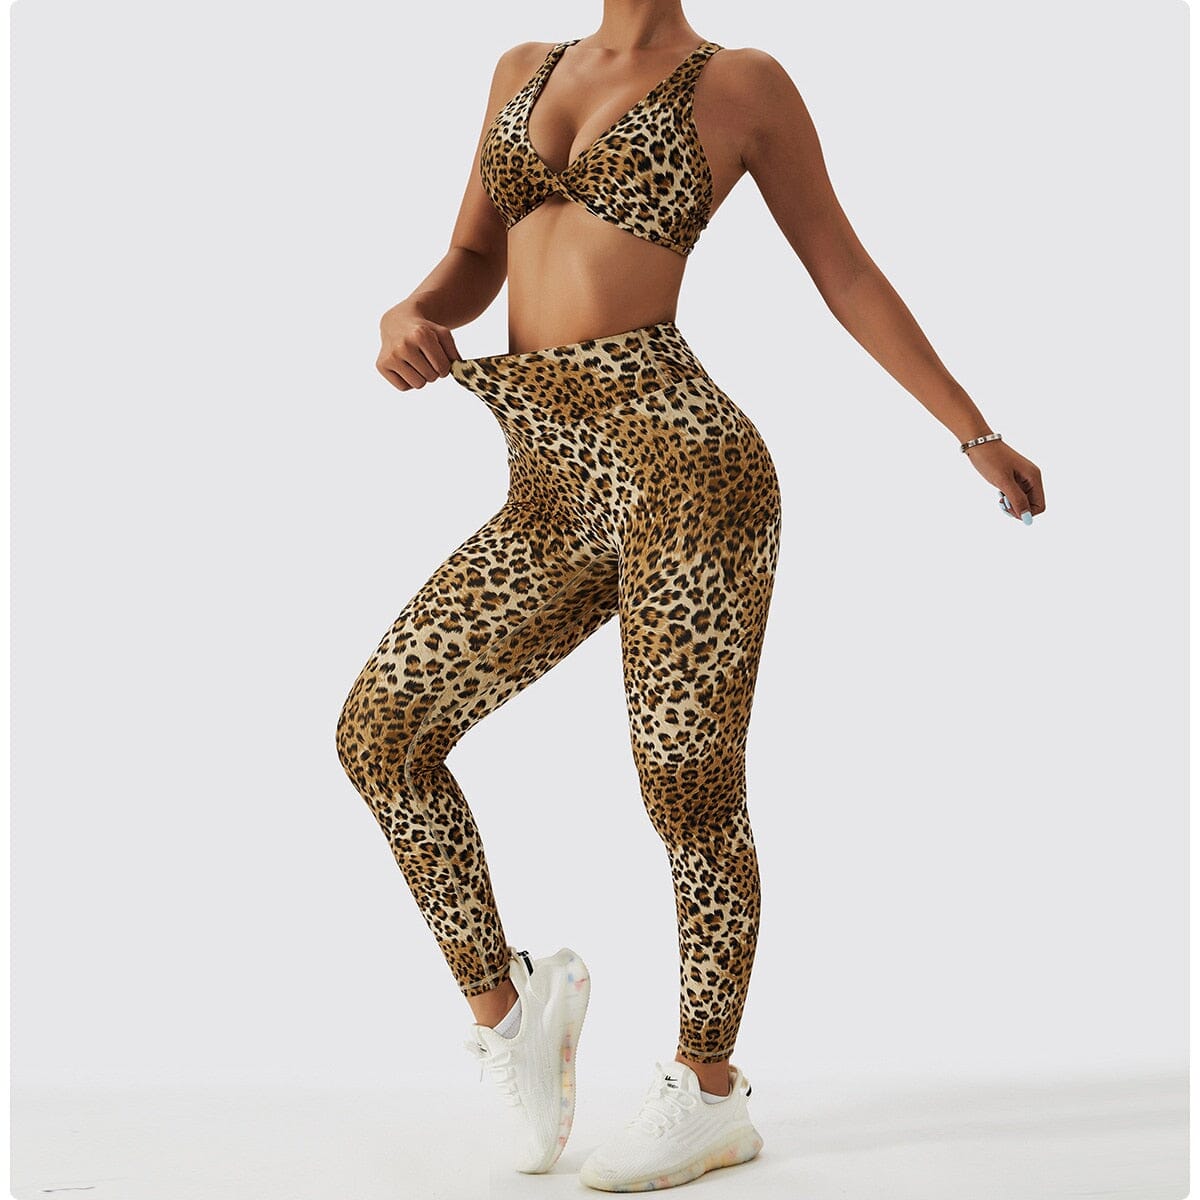 Chic Leopard Push-up Bra Activewear Truetights 